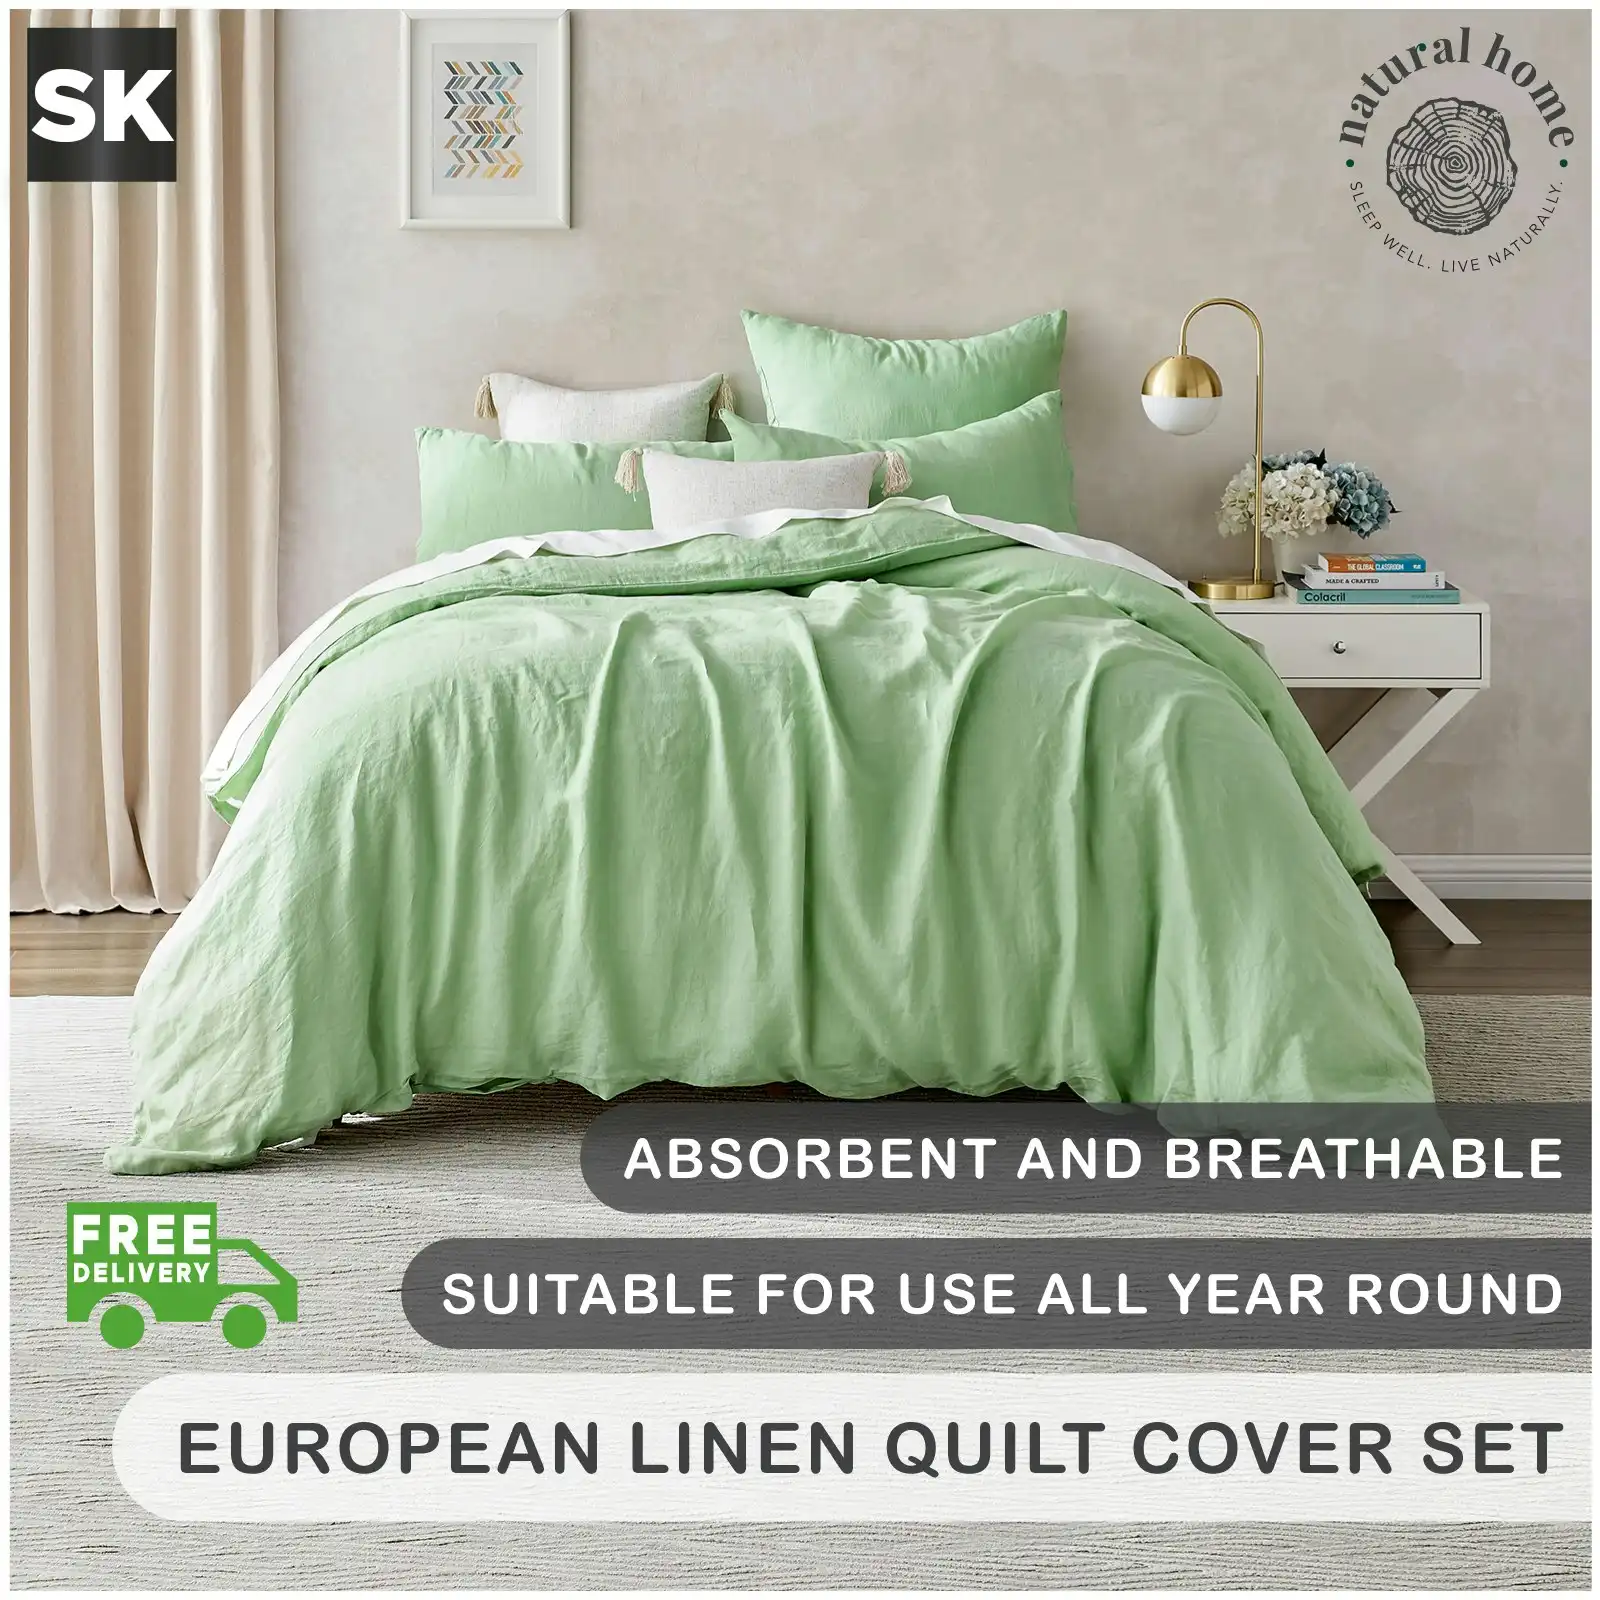 Natural Home Linen 100% European Flax Linen Quilt Cover Set - Sage - Super King Bed